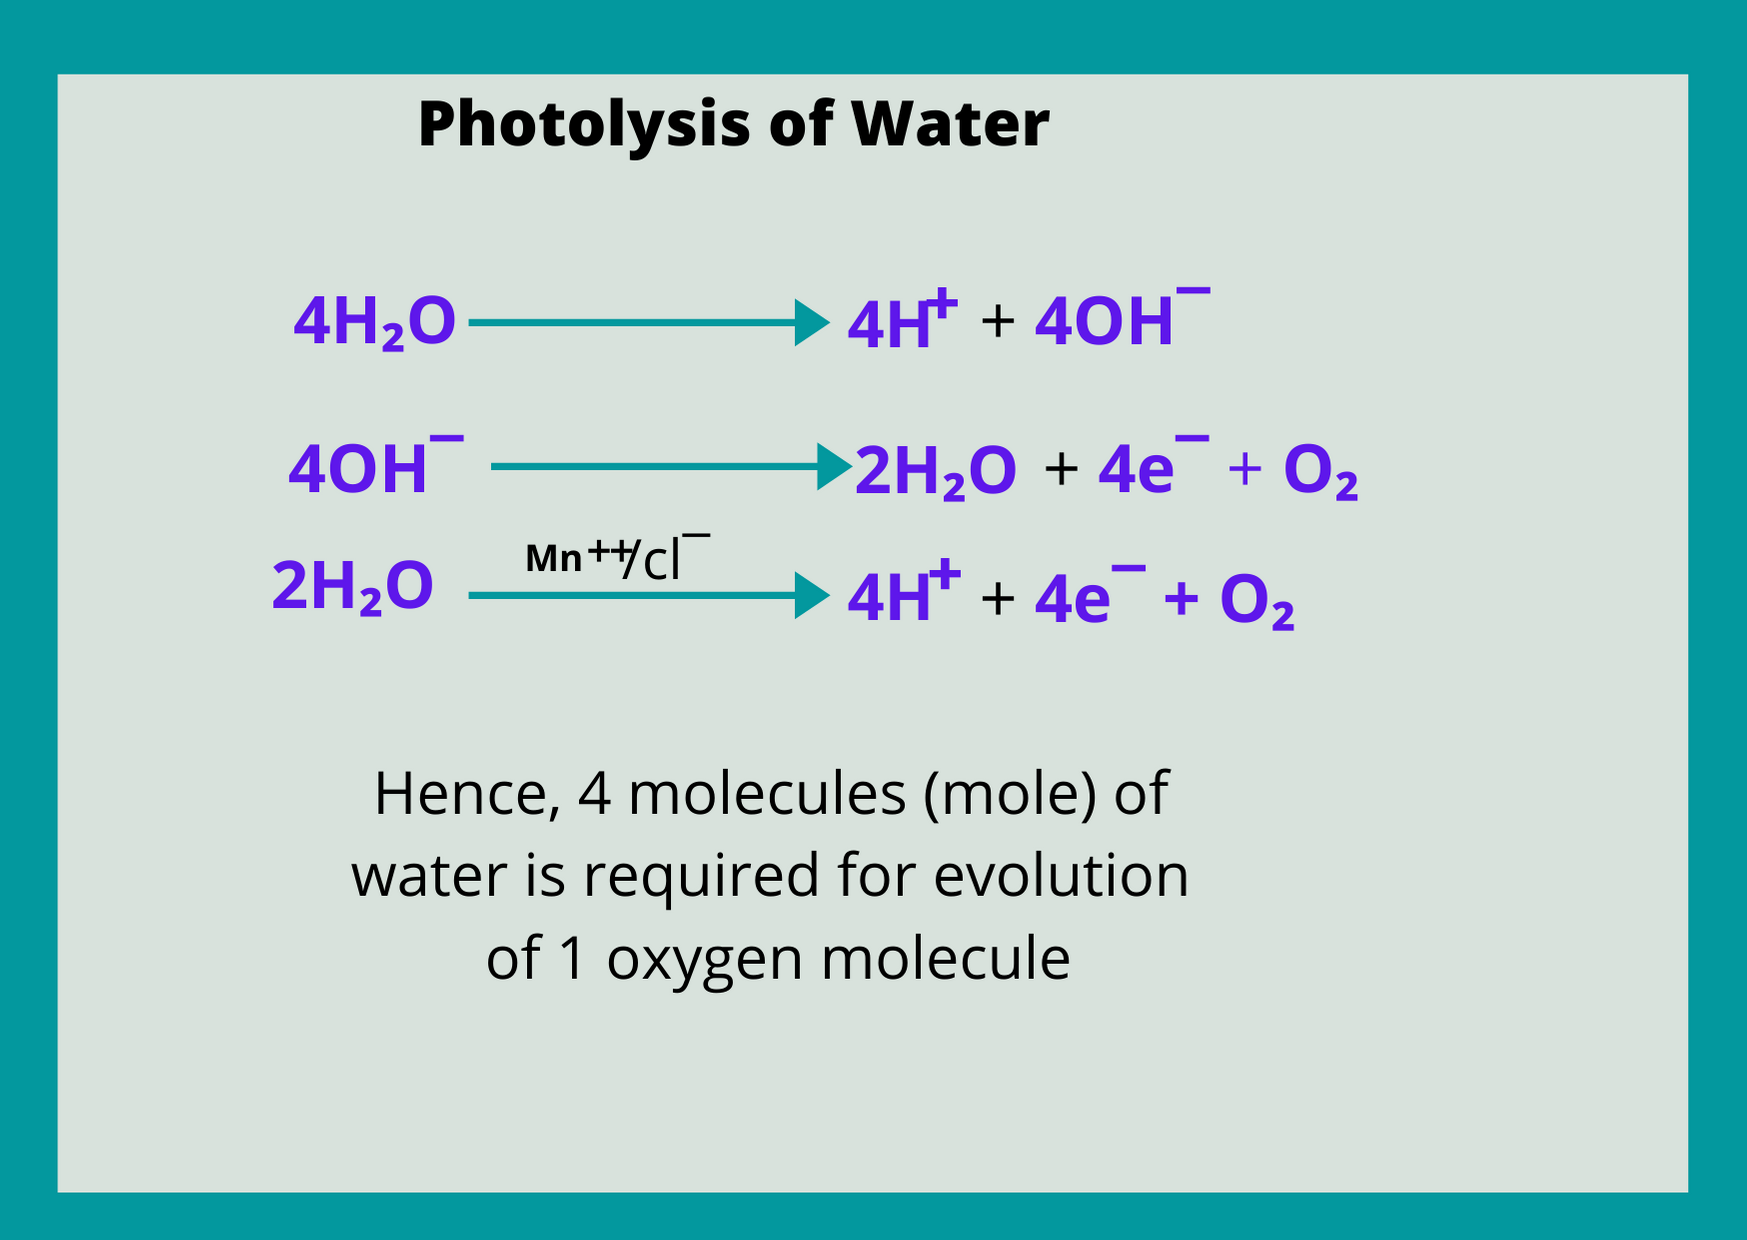 photolysis of water